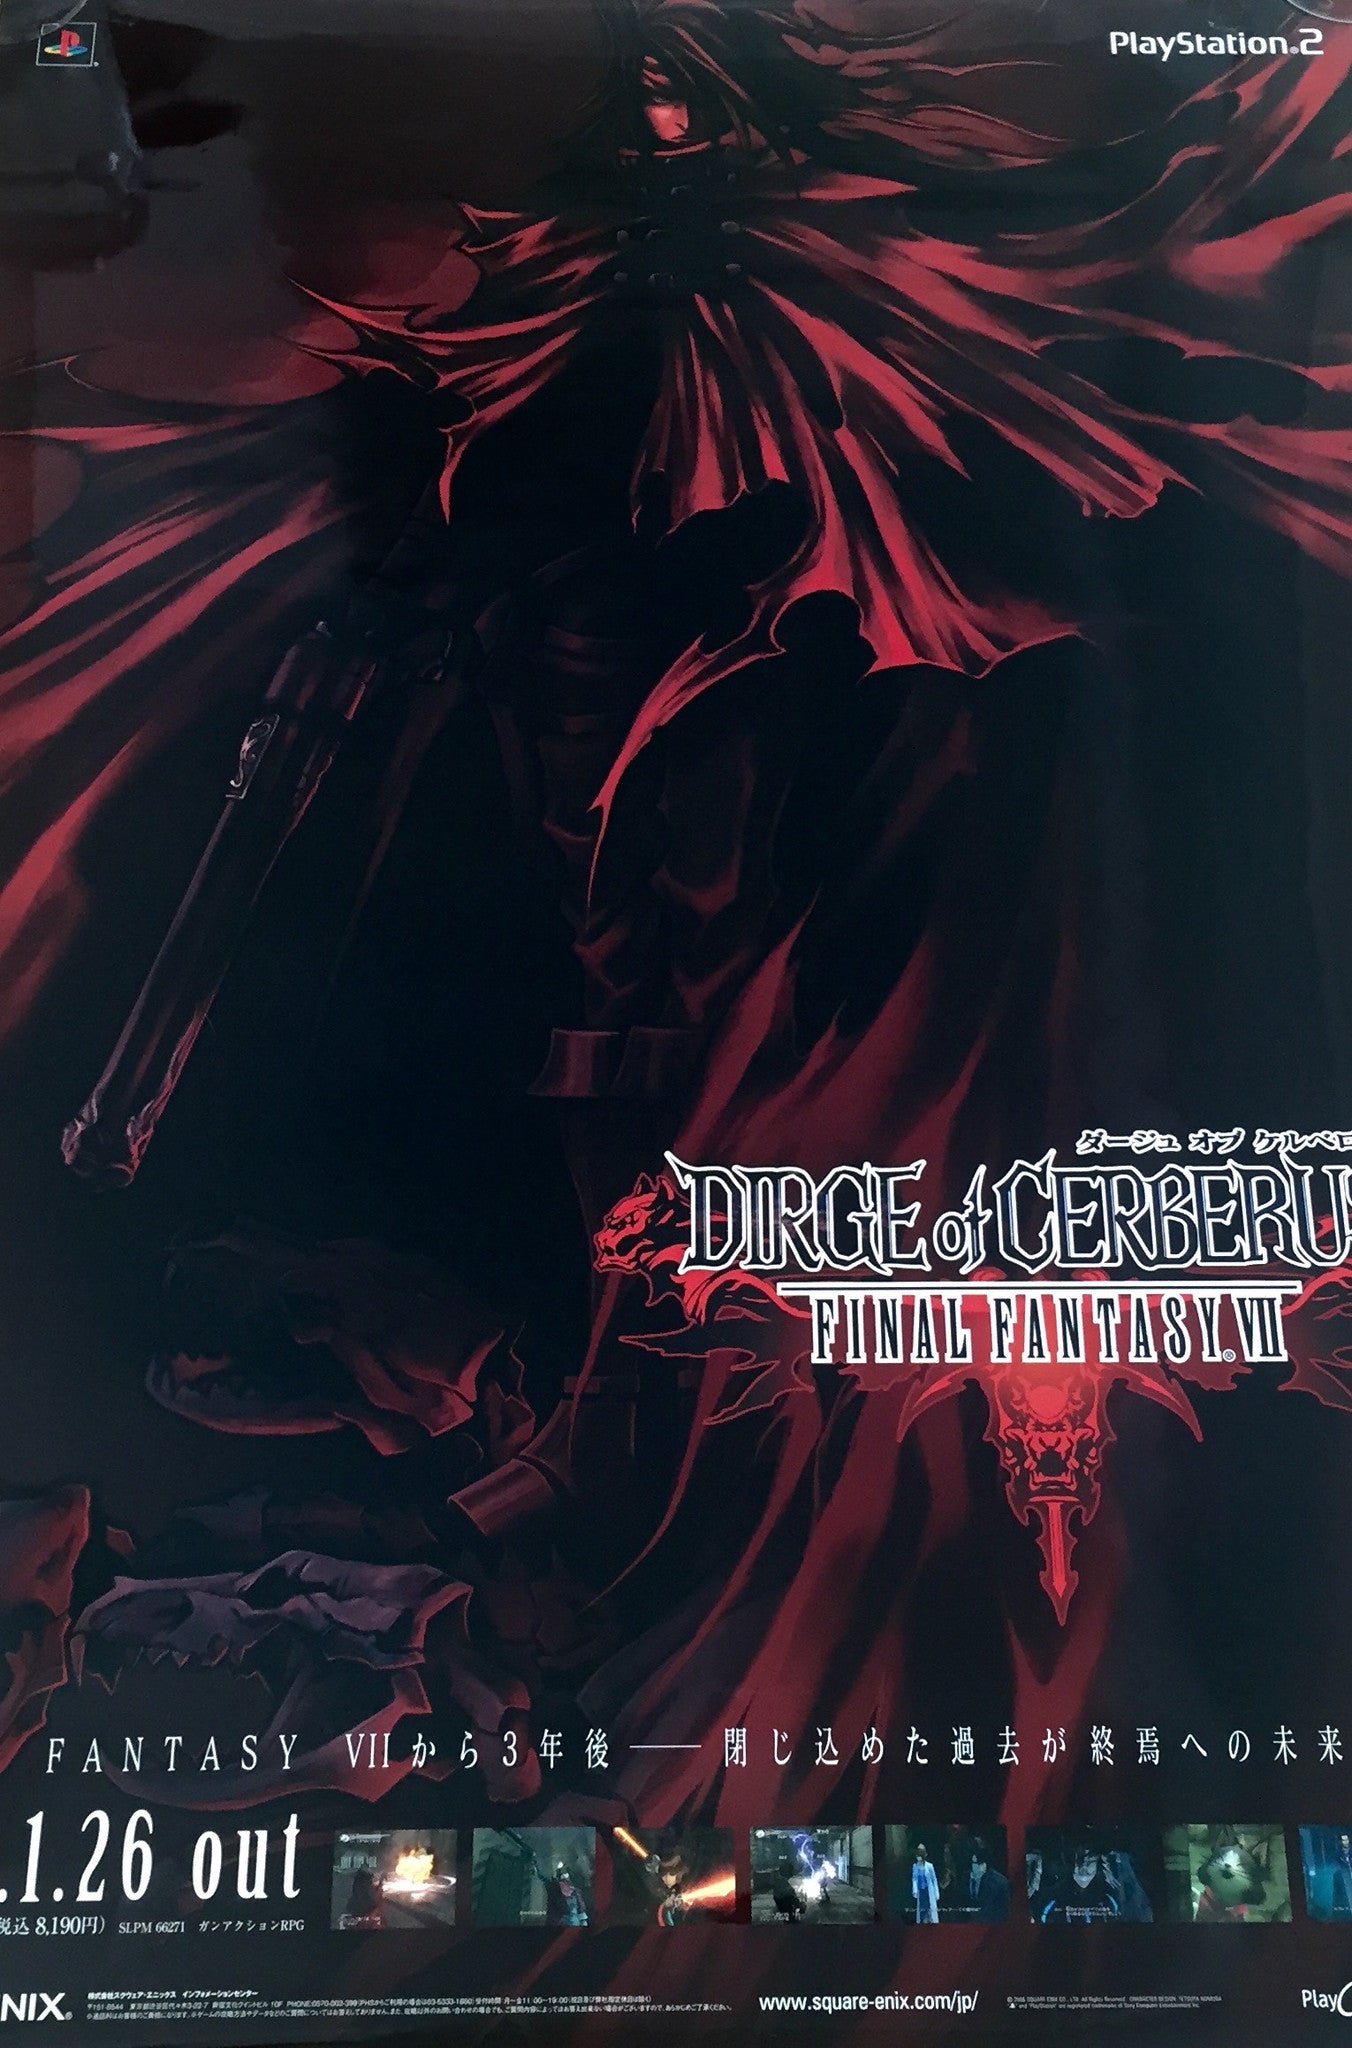 Final Fantasy VII: Dirge of Cerberus (B2) Japanese Promotional Poster #1